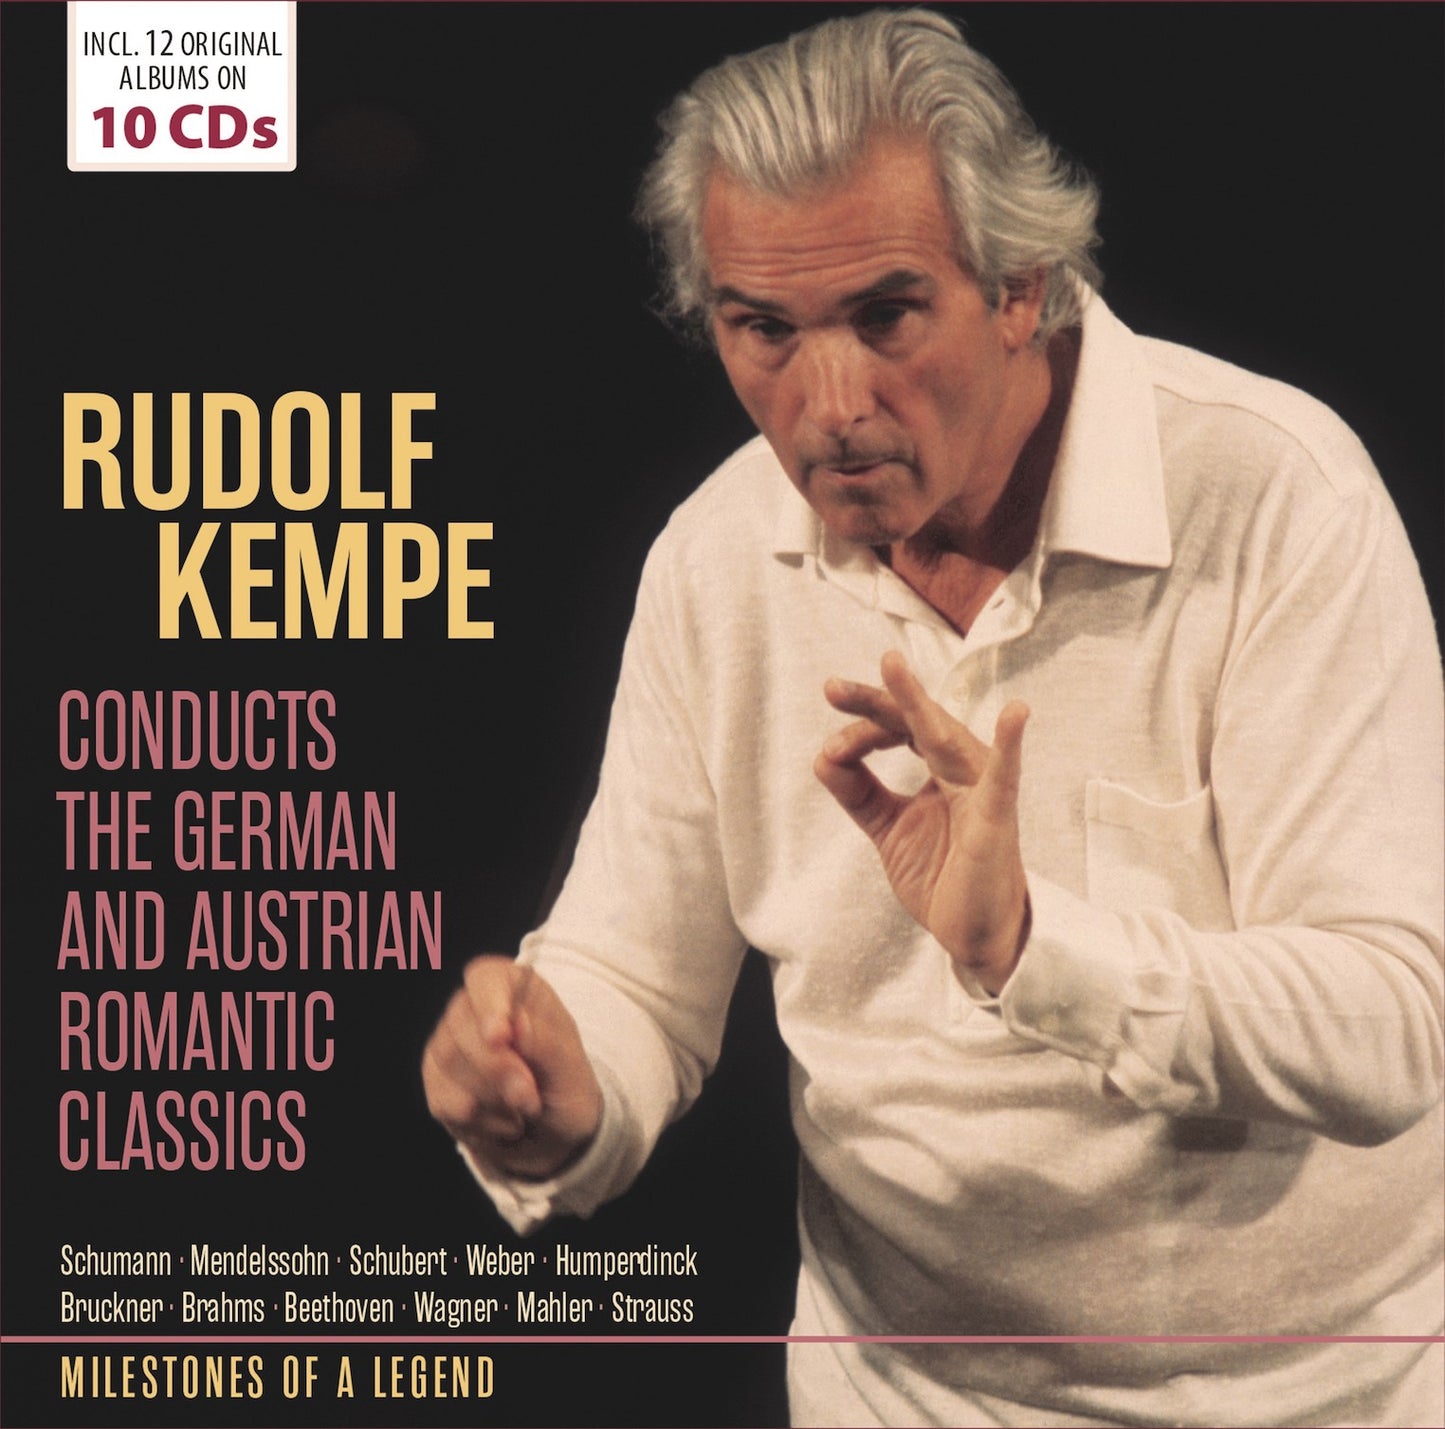 RUDOLF KEMPE CONDUCTS THE GERMAN AND AUSTRIAN ROMANTIC CLASSICS (10 CDS)